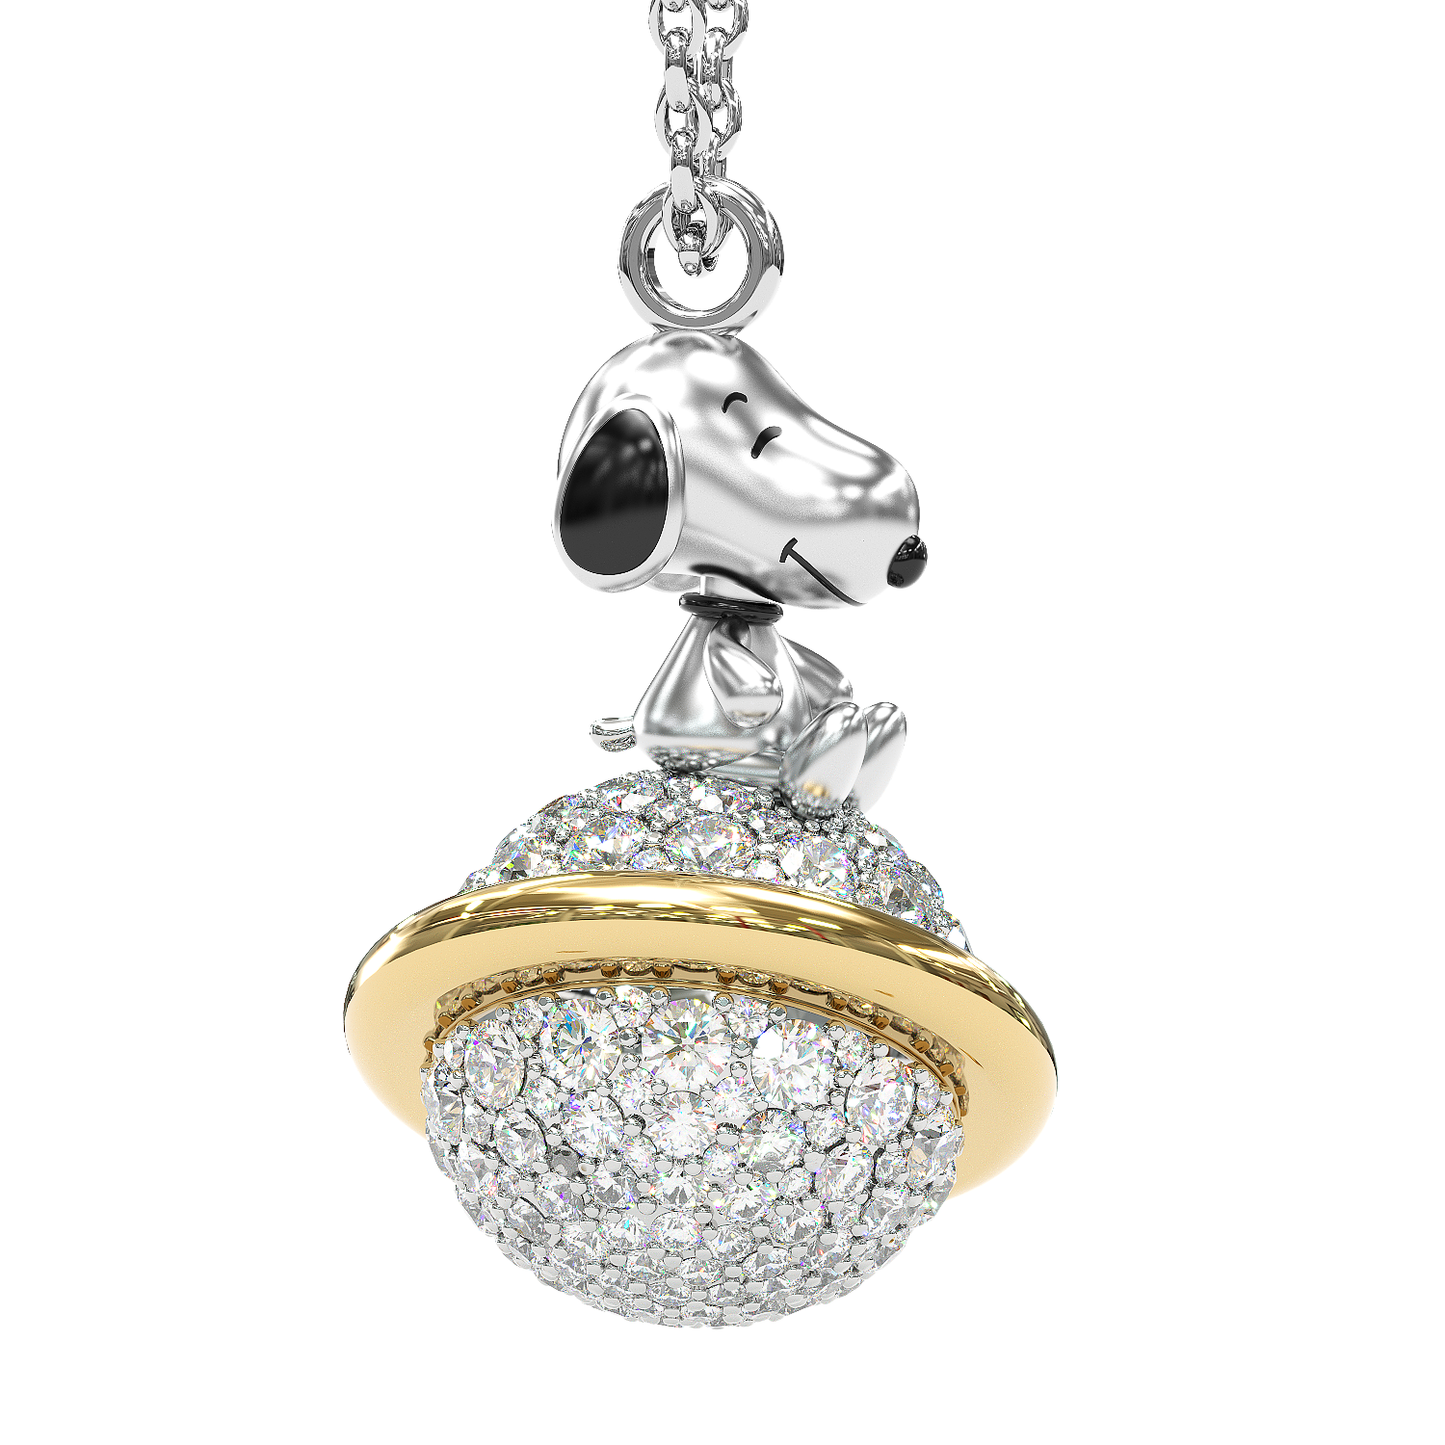 Jorrio Handmade Smiling Puppy Diamond Sterling Silver Necklace